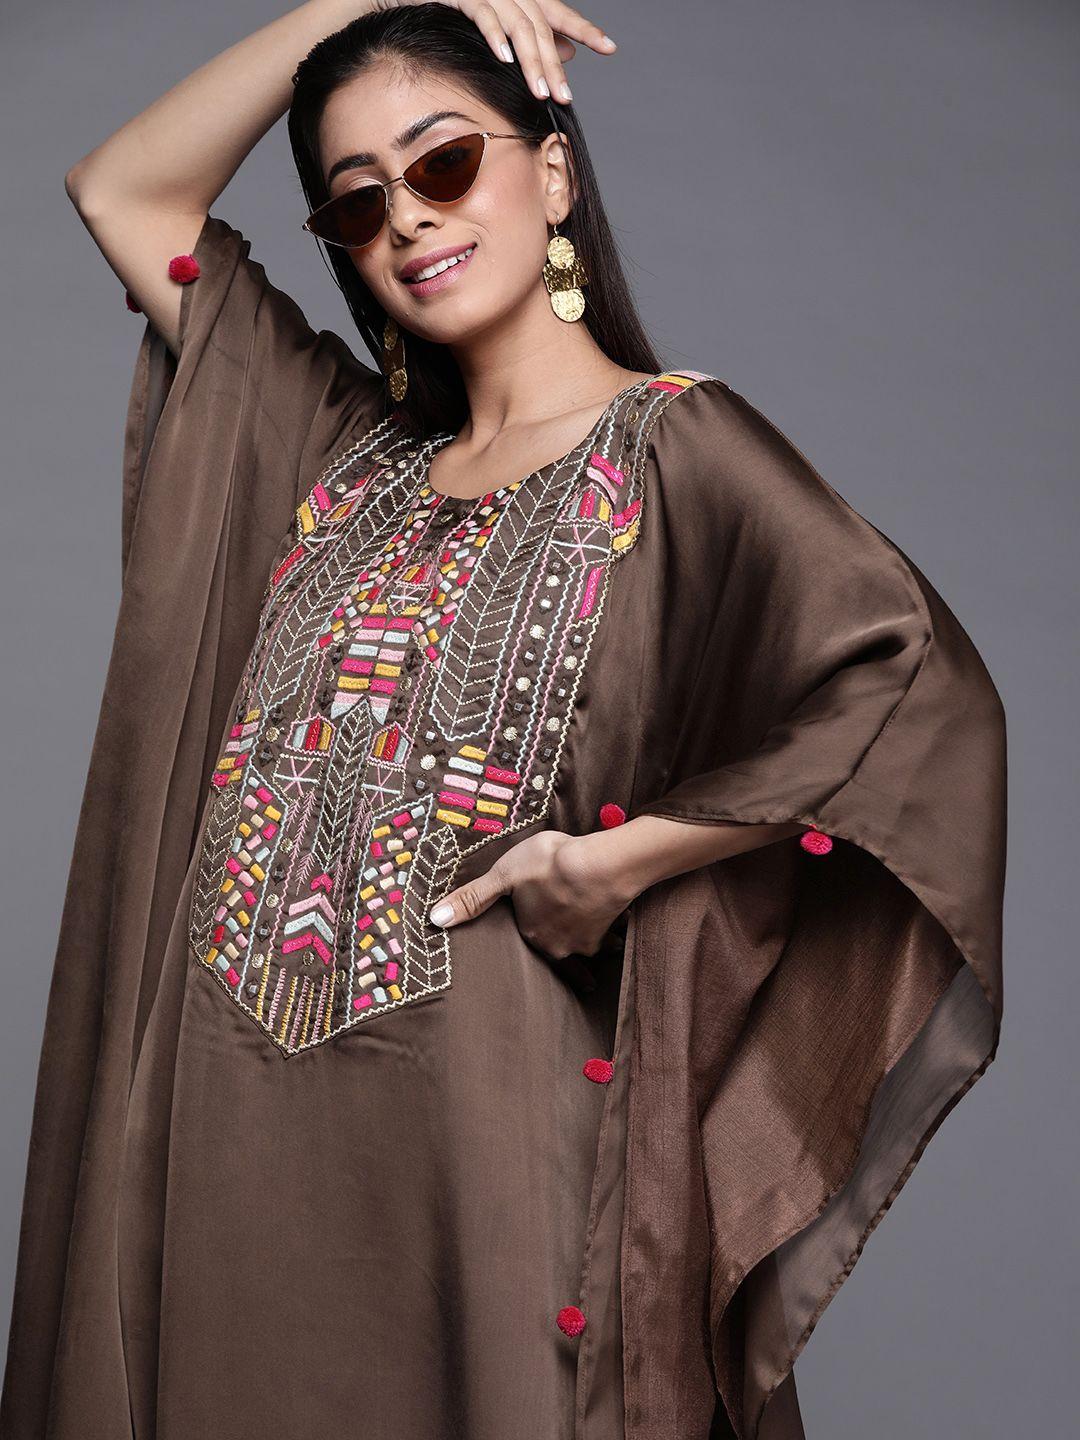 inddus women brown & pink embroidered extended sleeves kaftan kurta